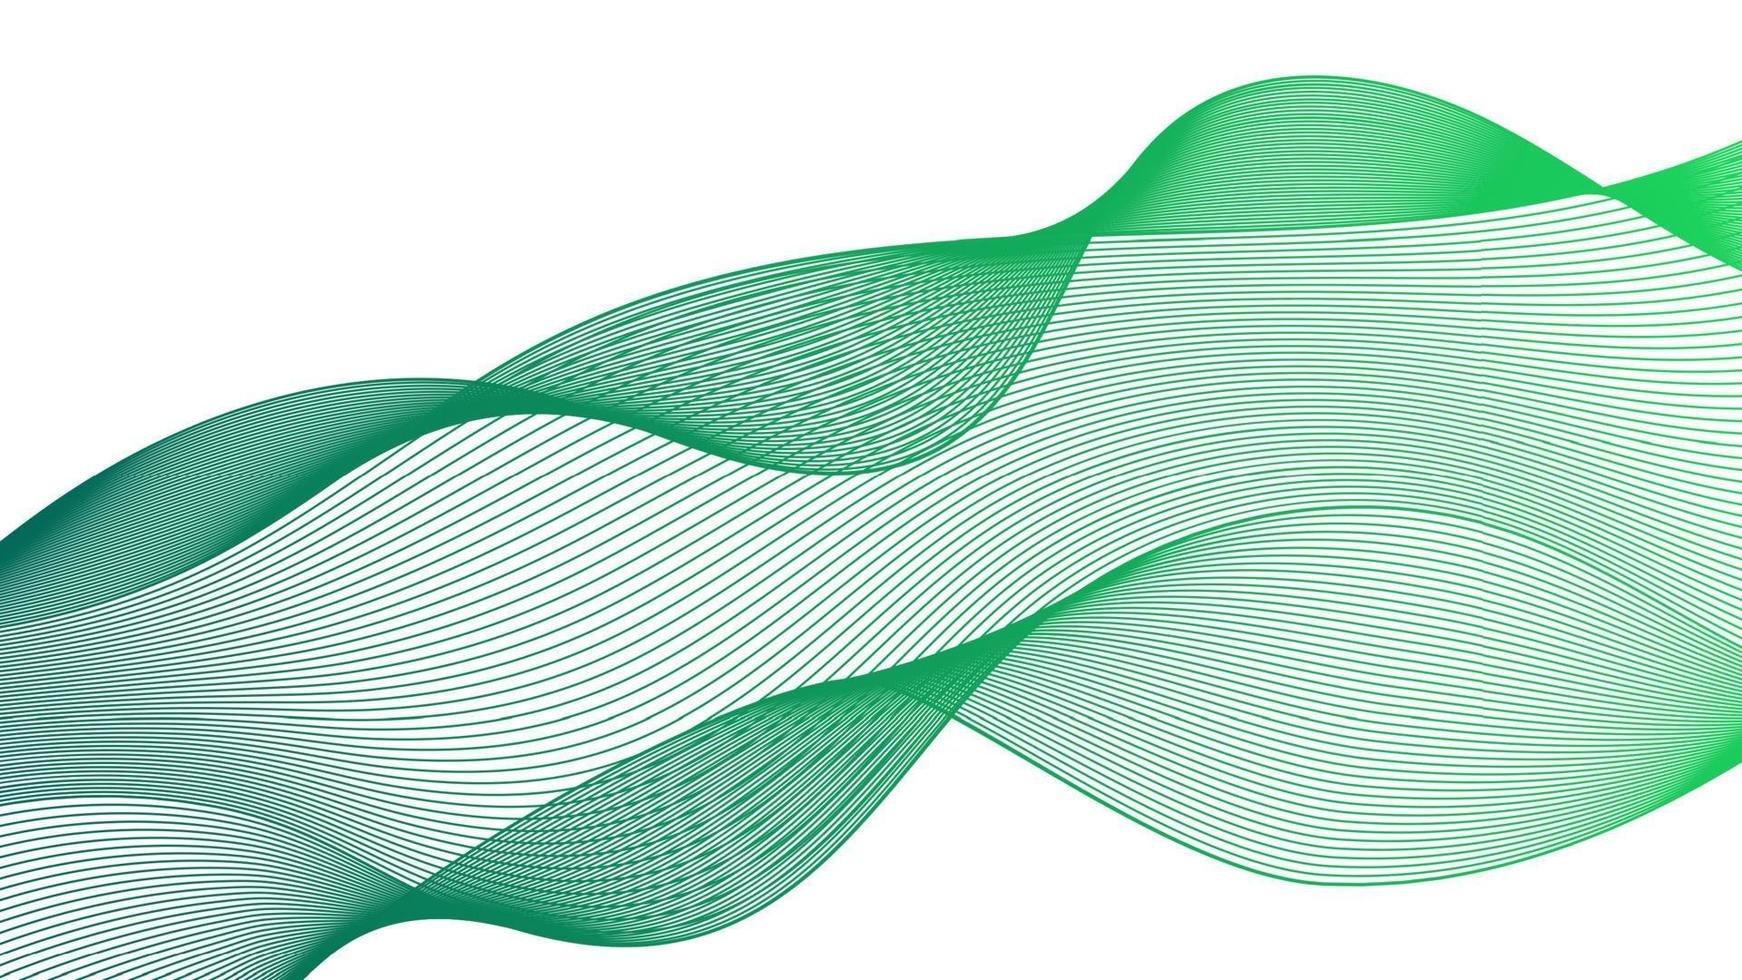 abstrakt bakgrund med färgrik Vinka lutning rader på vit bakgrund. modern teknologi bakgrund, Vinka design. vektor illustration